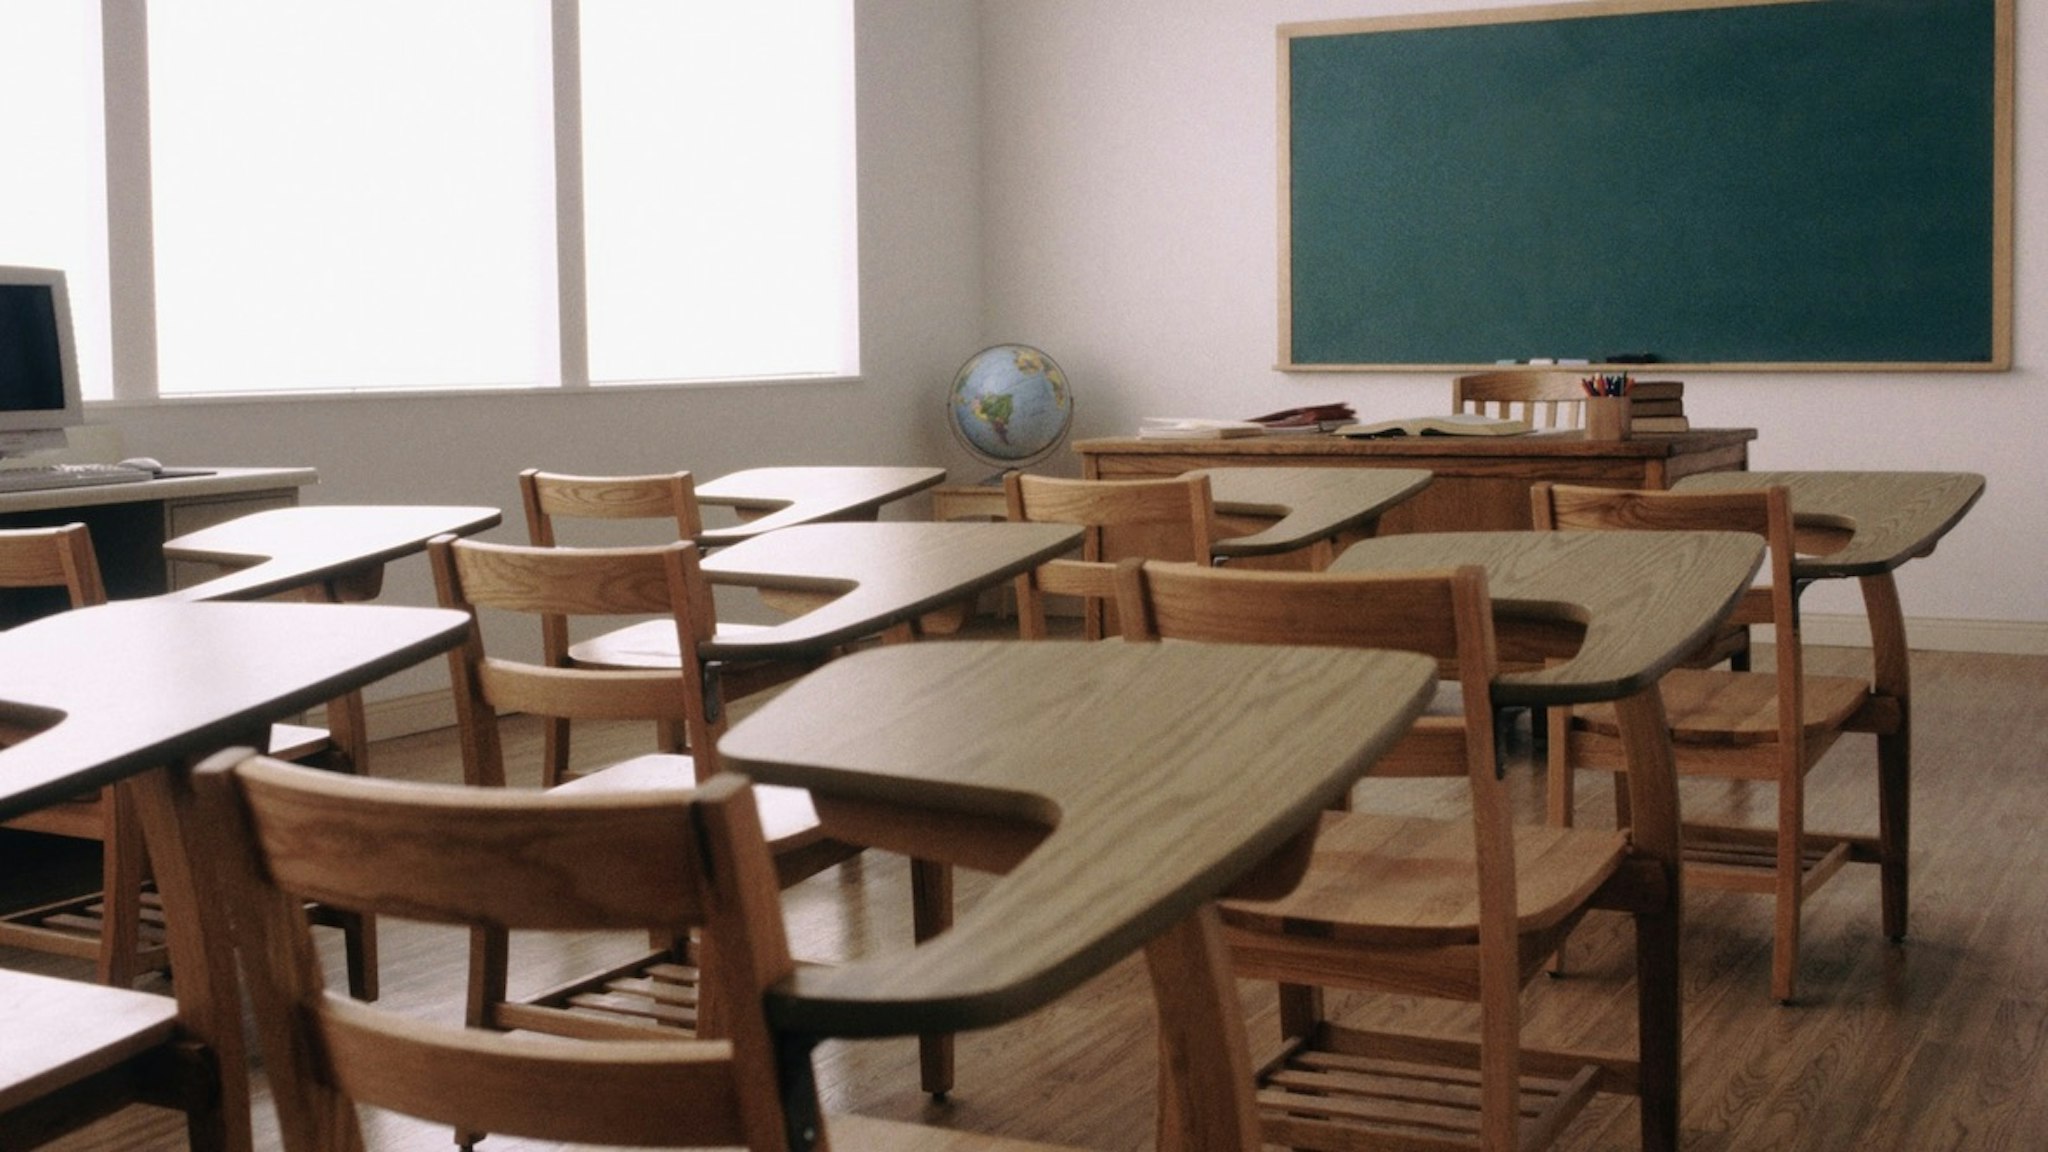 Empty desk in elementary school classroom - stock photo Rob Lewine via Getty Images